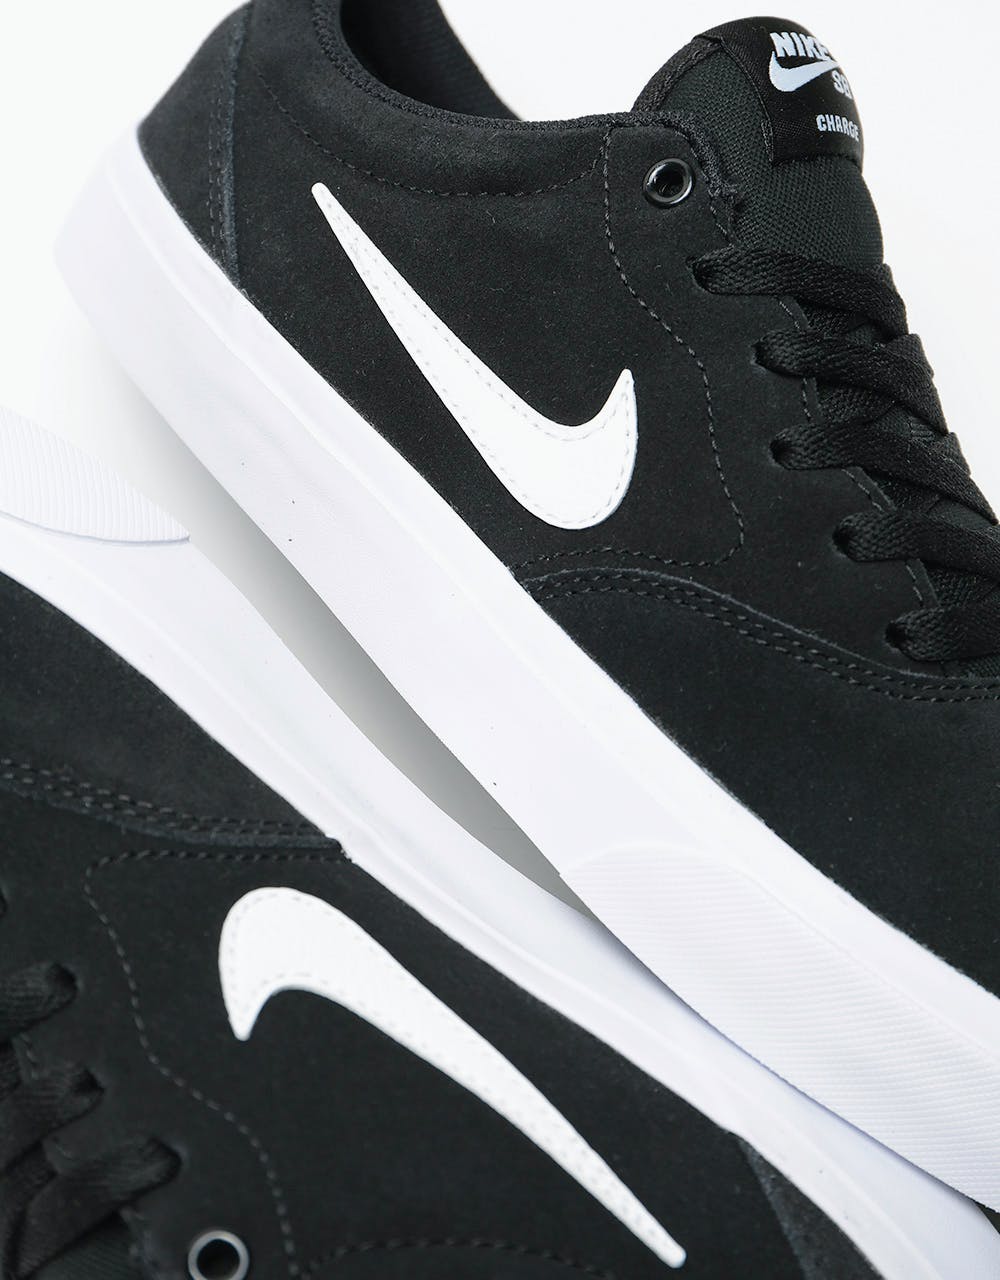 Nike SB Charge Suede Skate Shoes - Black/White-Black